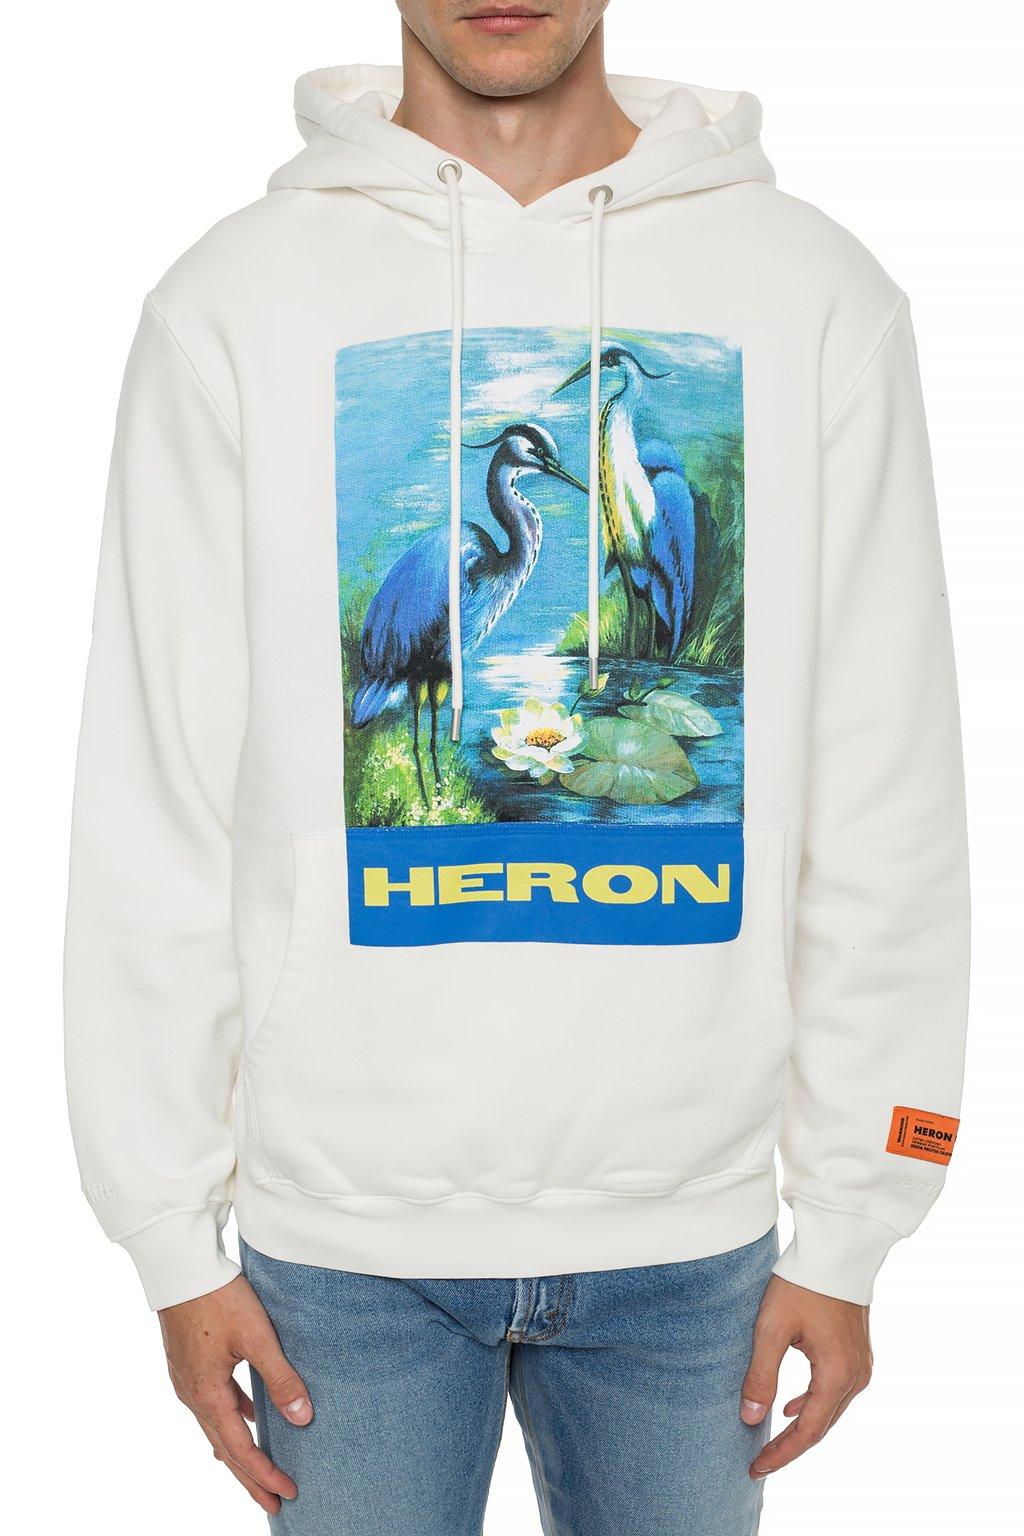 Heron Preston Cotton Graphic Logo Print Hoodie in White for Men - Lyst